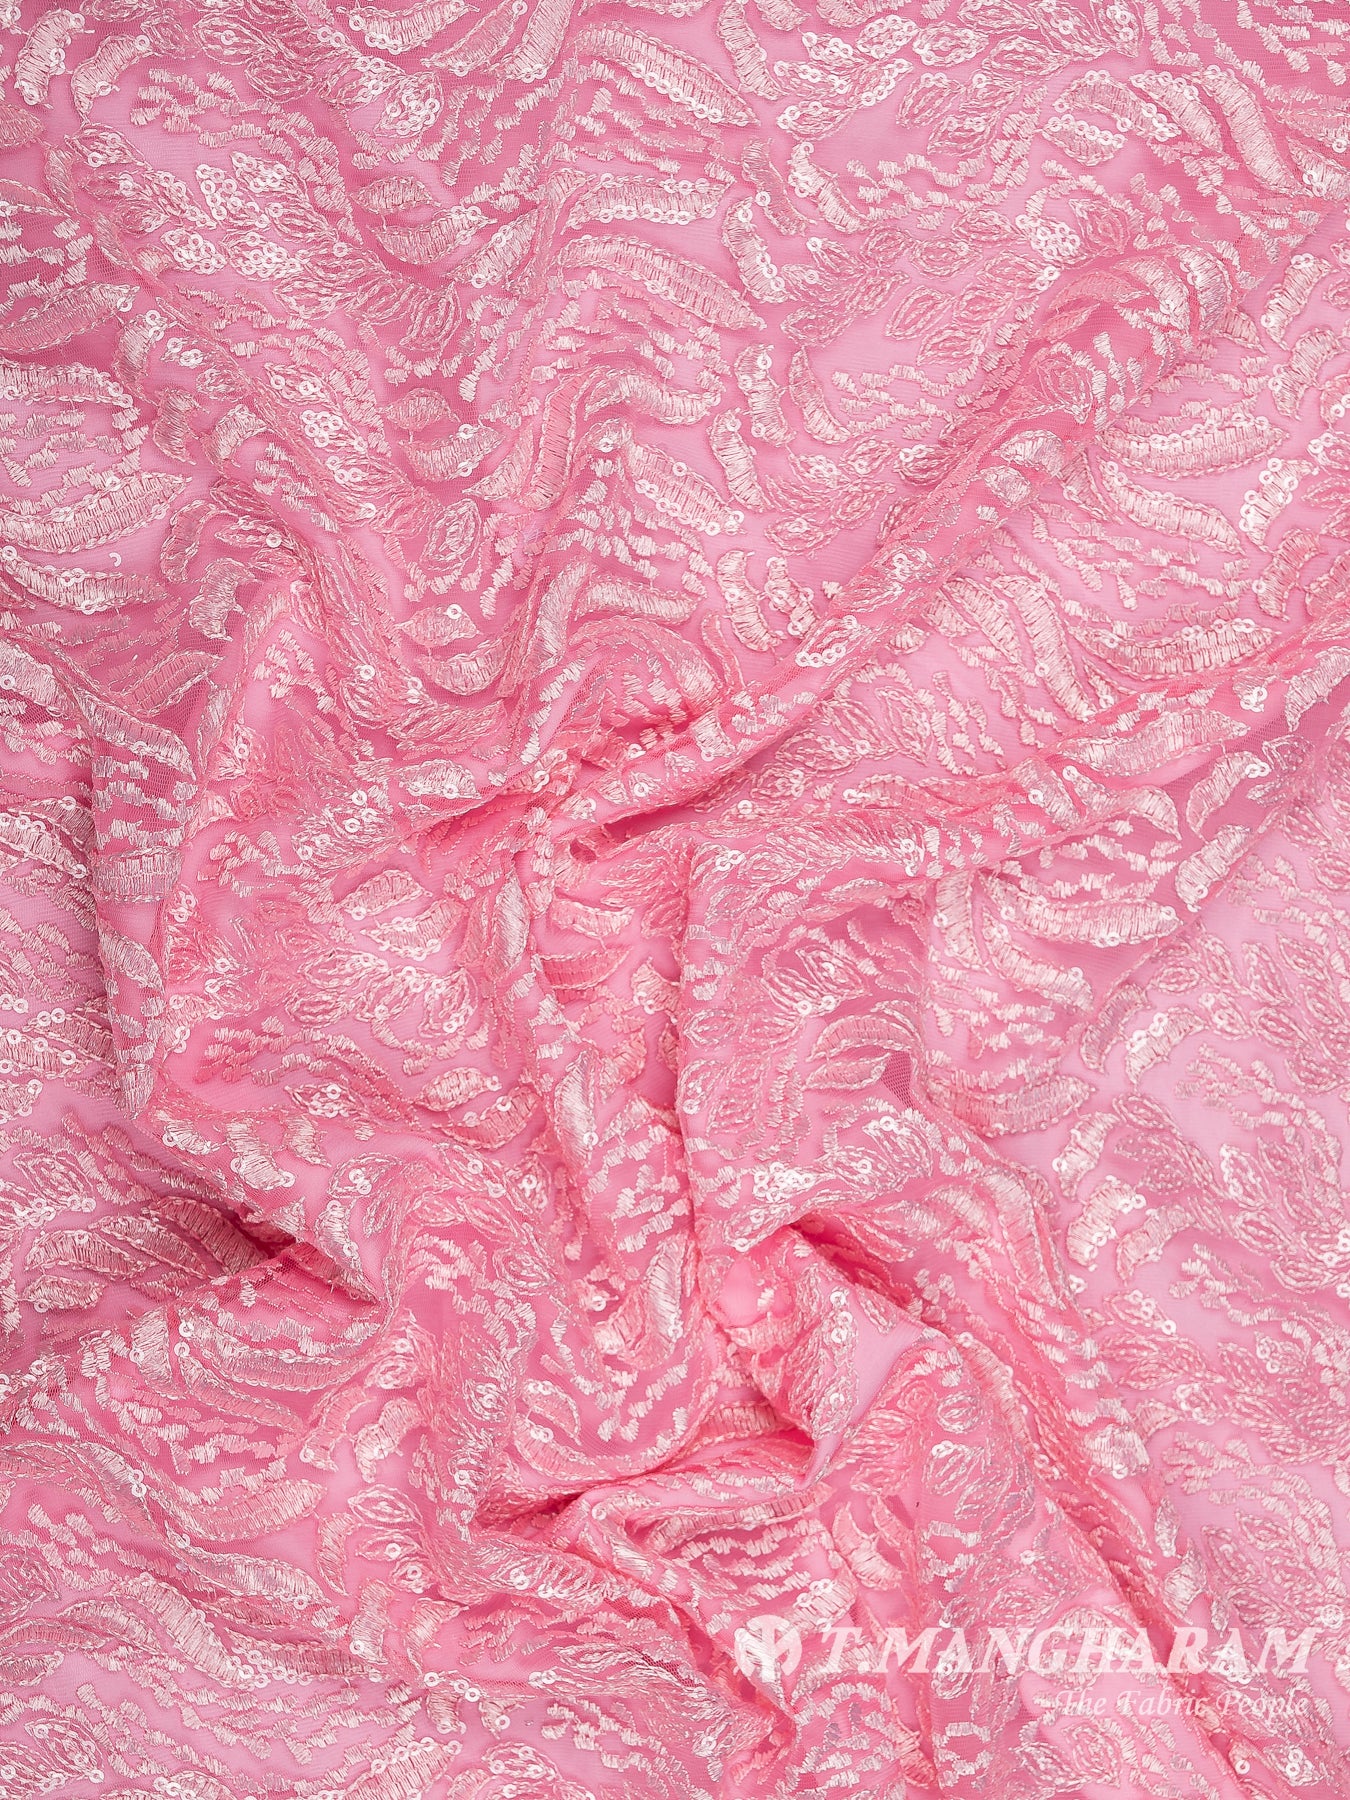 Pink Fancy Net Fabric - EB5799 view-4